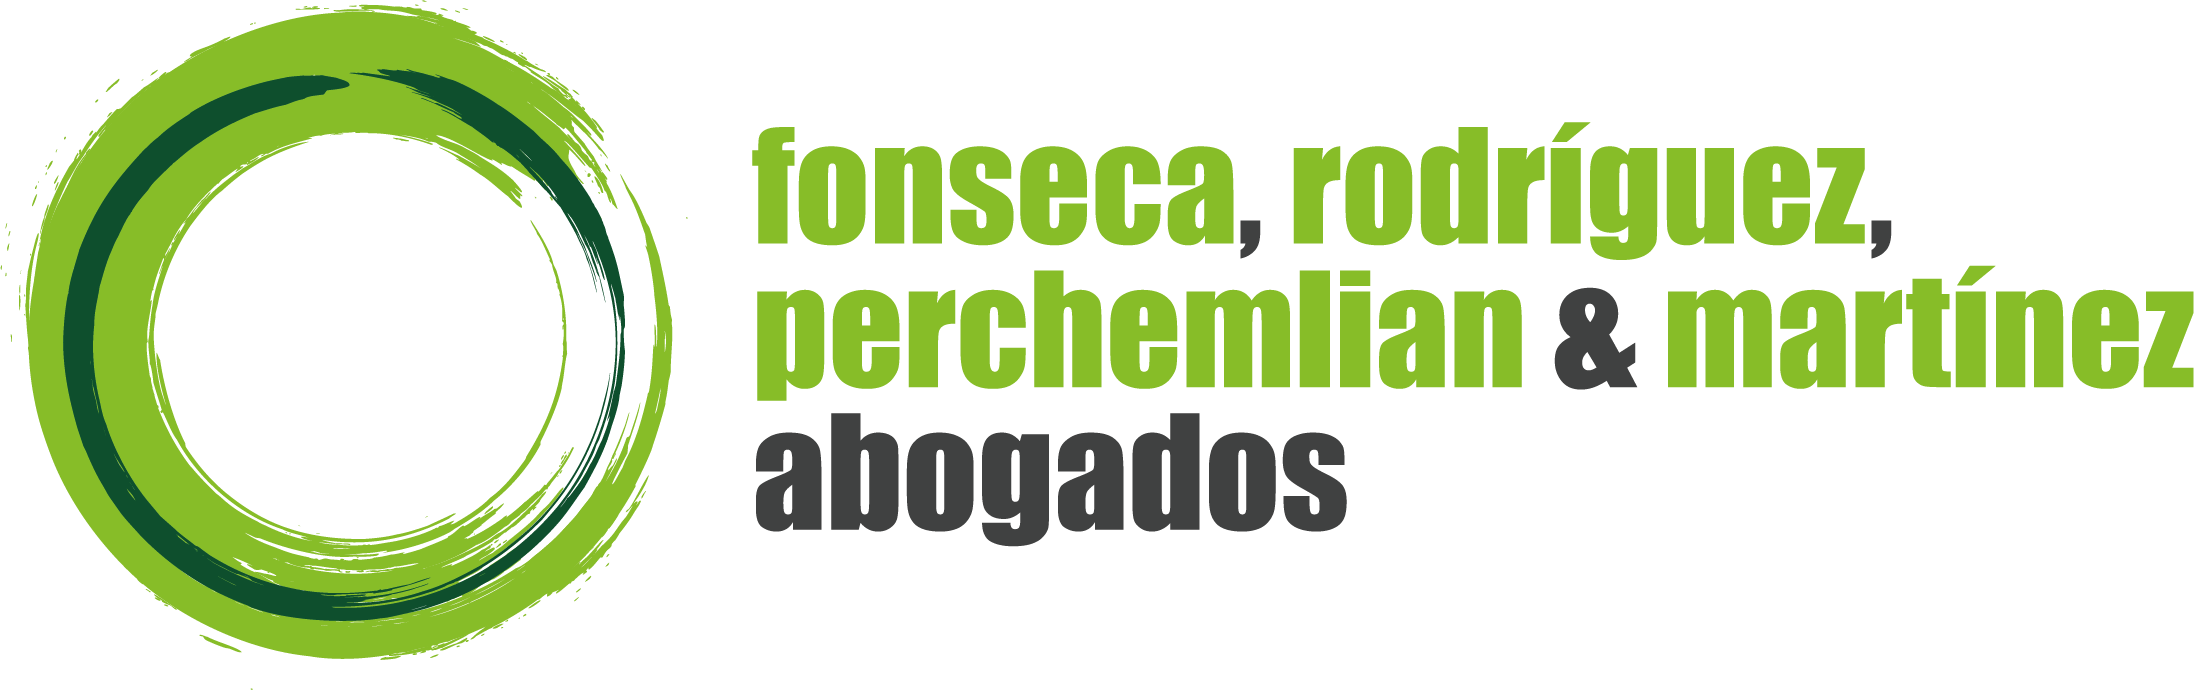 FORPEM Logo Salvador Fonseca